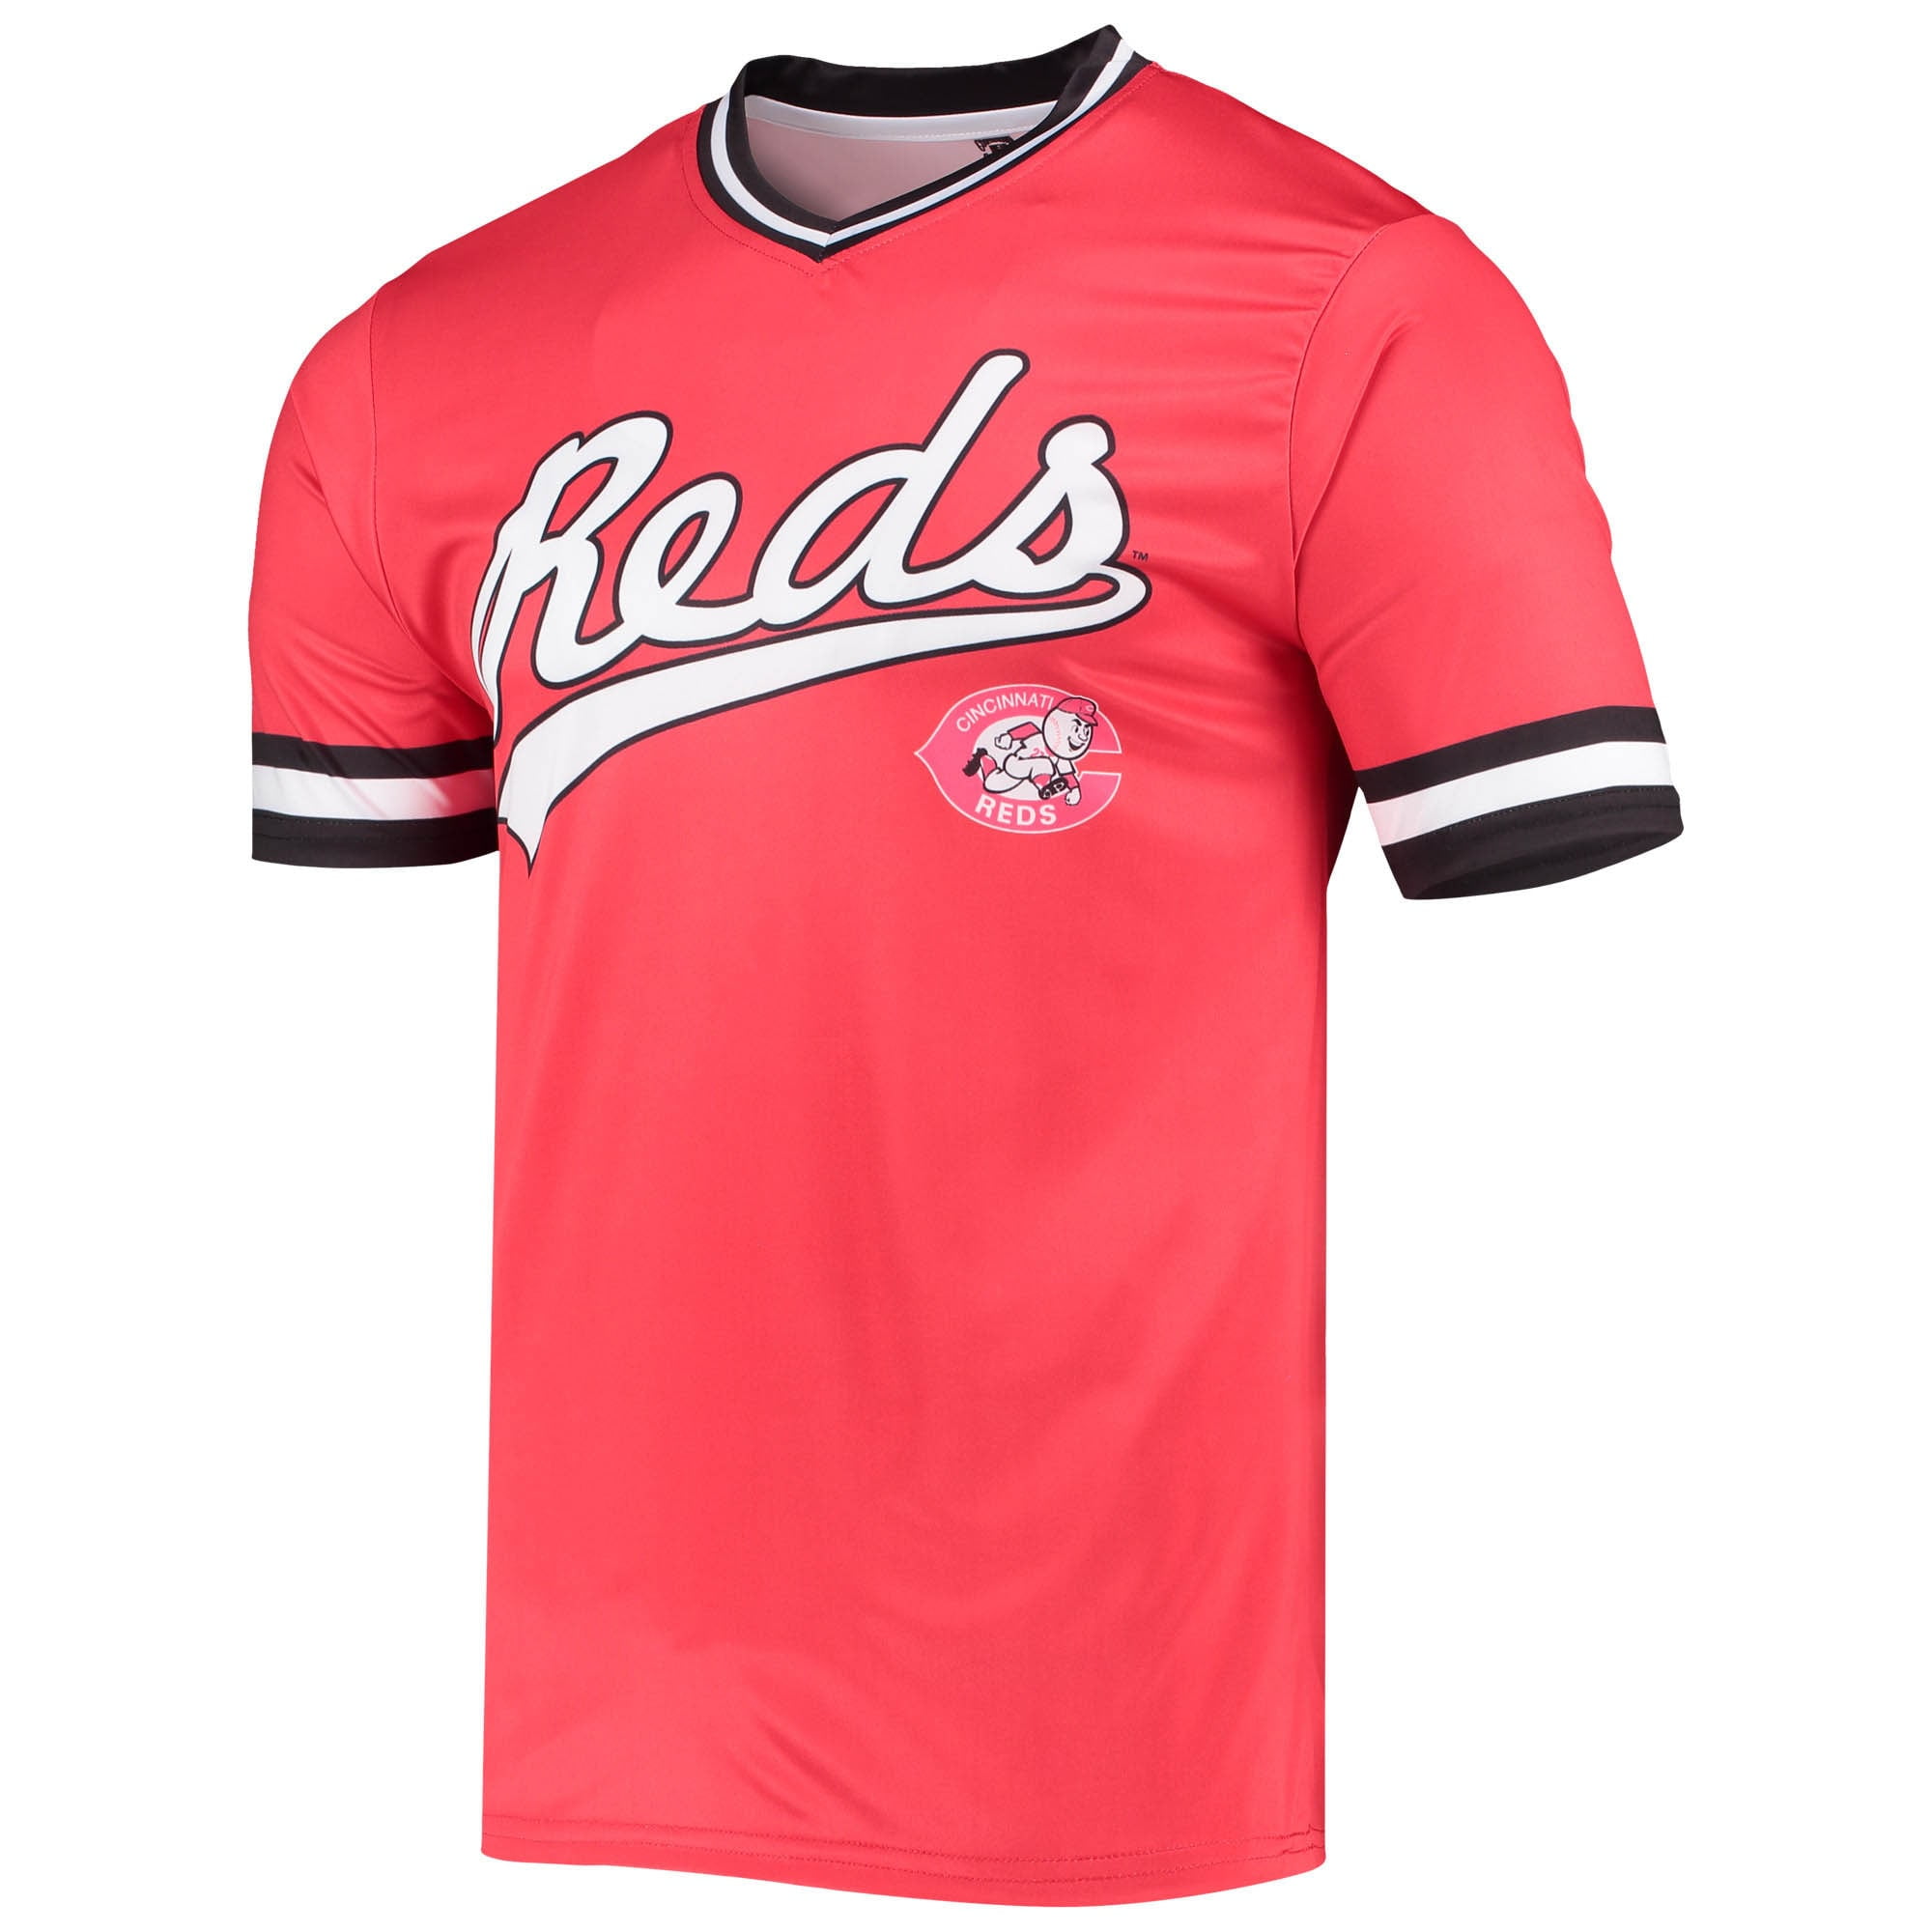 reds baseball jersey